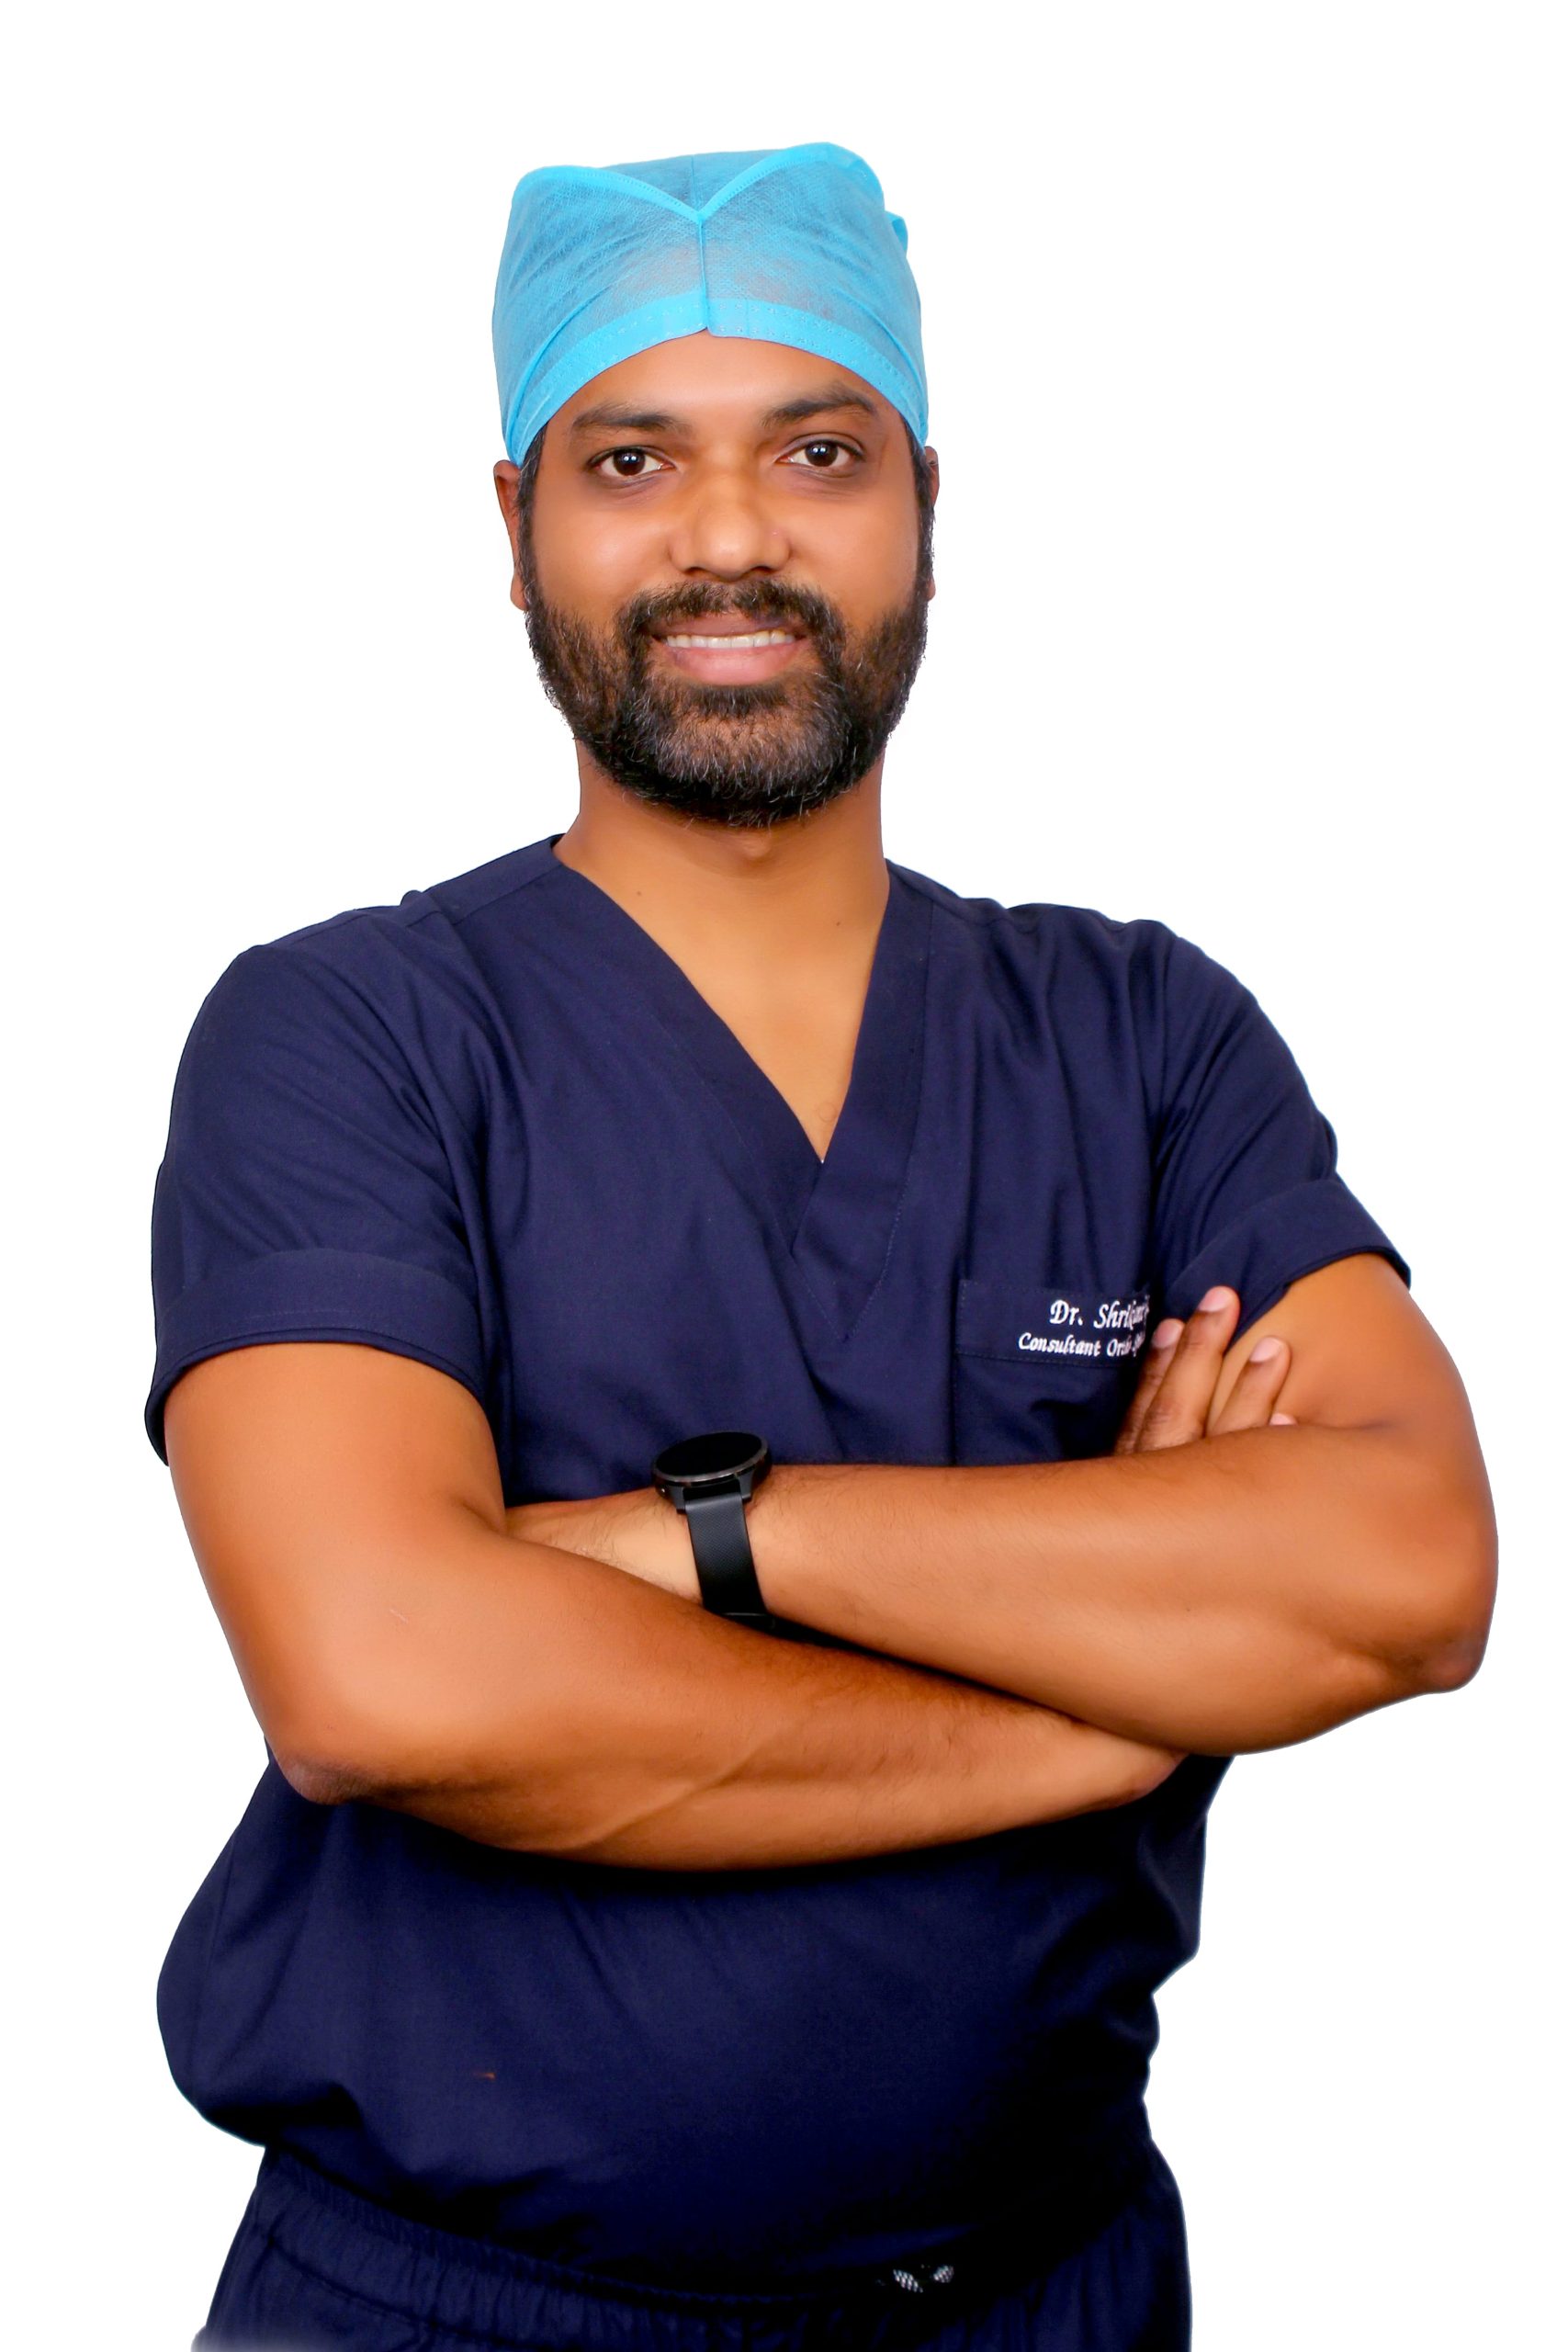 Dr. Shrikant Ega